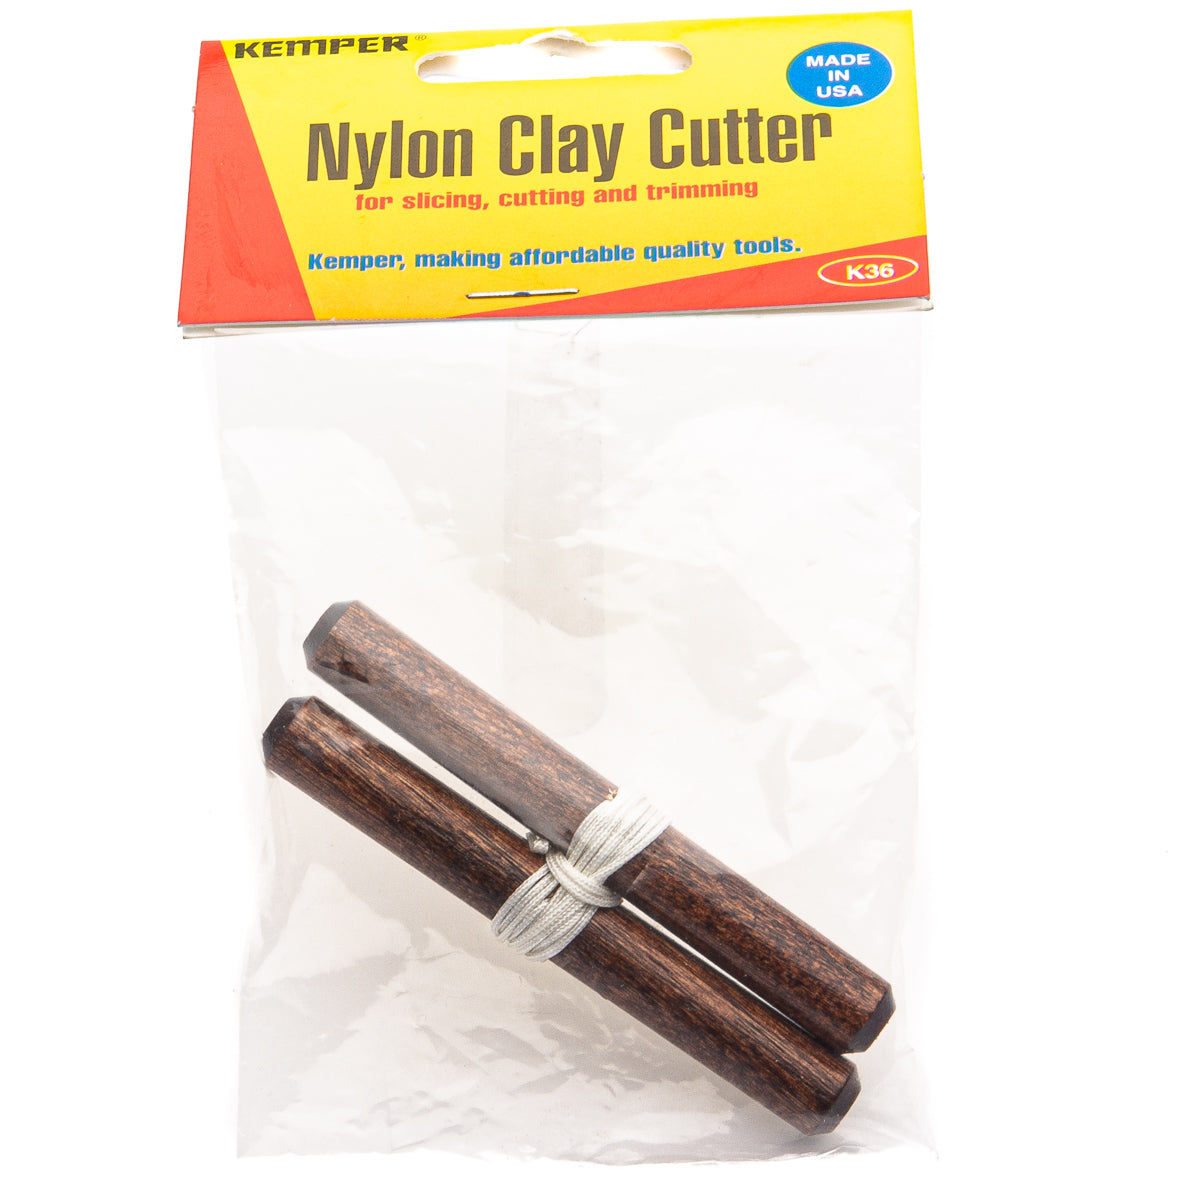 K36 Nylon Clay Cutter